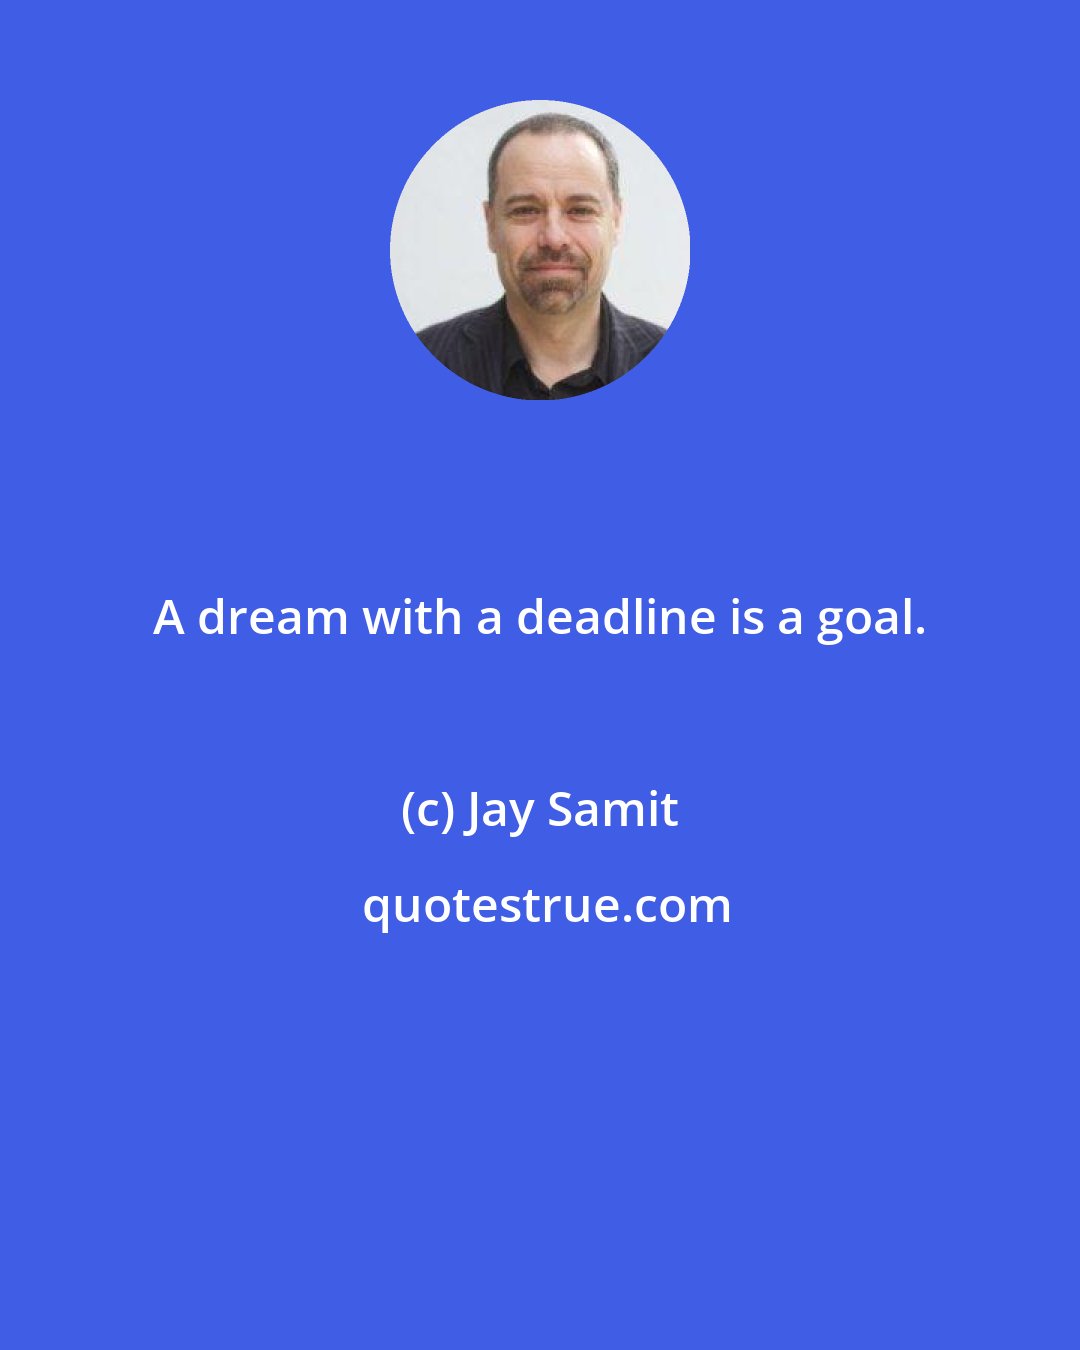 Jay Samit: A dream with a deadline is a goal.